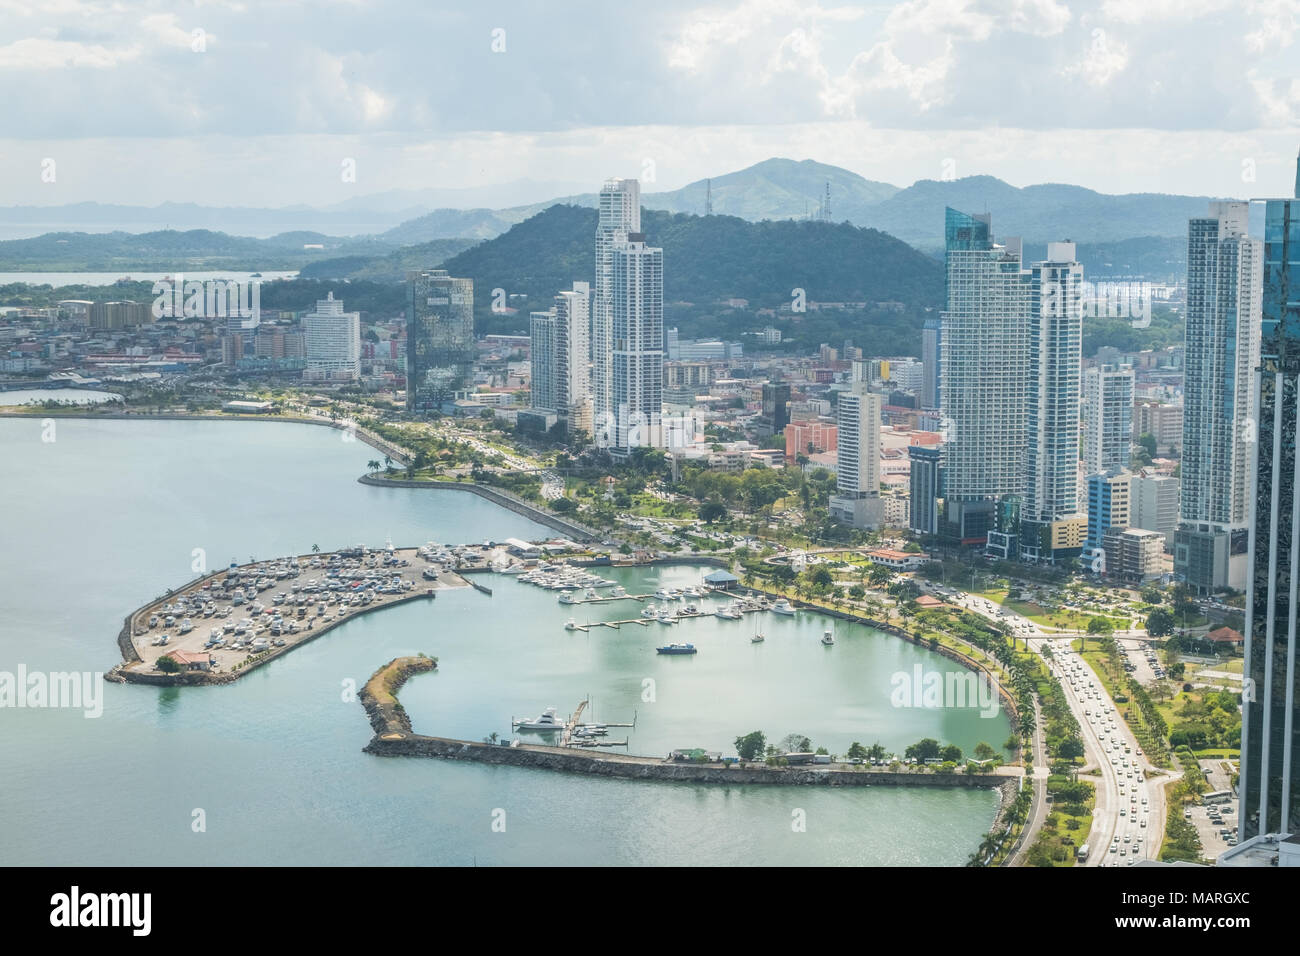 Panama City yacht Yacht Hafen und Küste Luftbild - Stockfoto